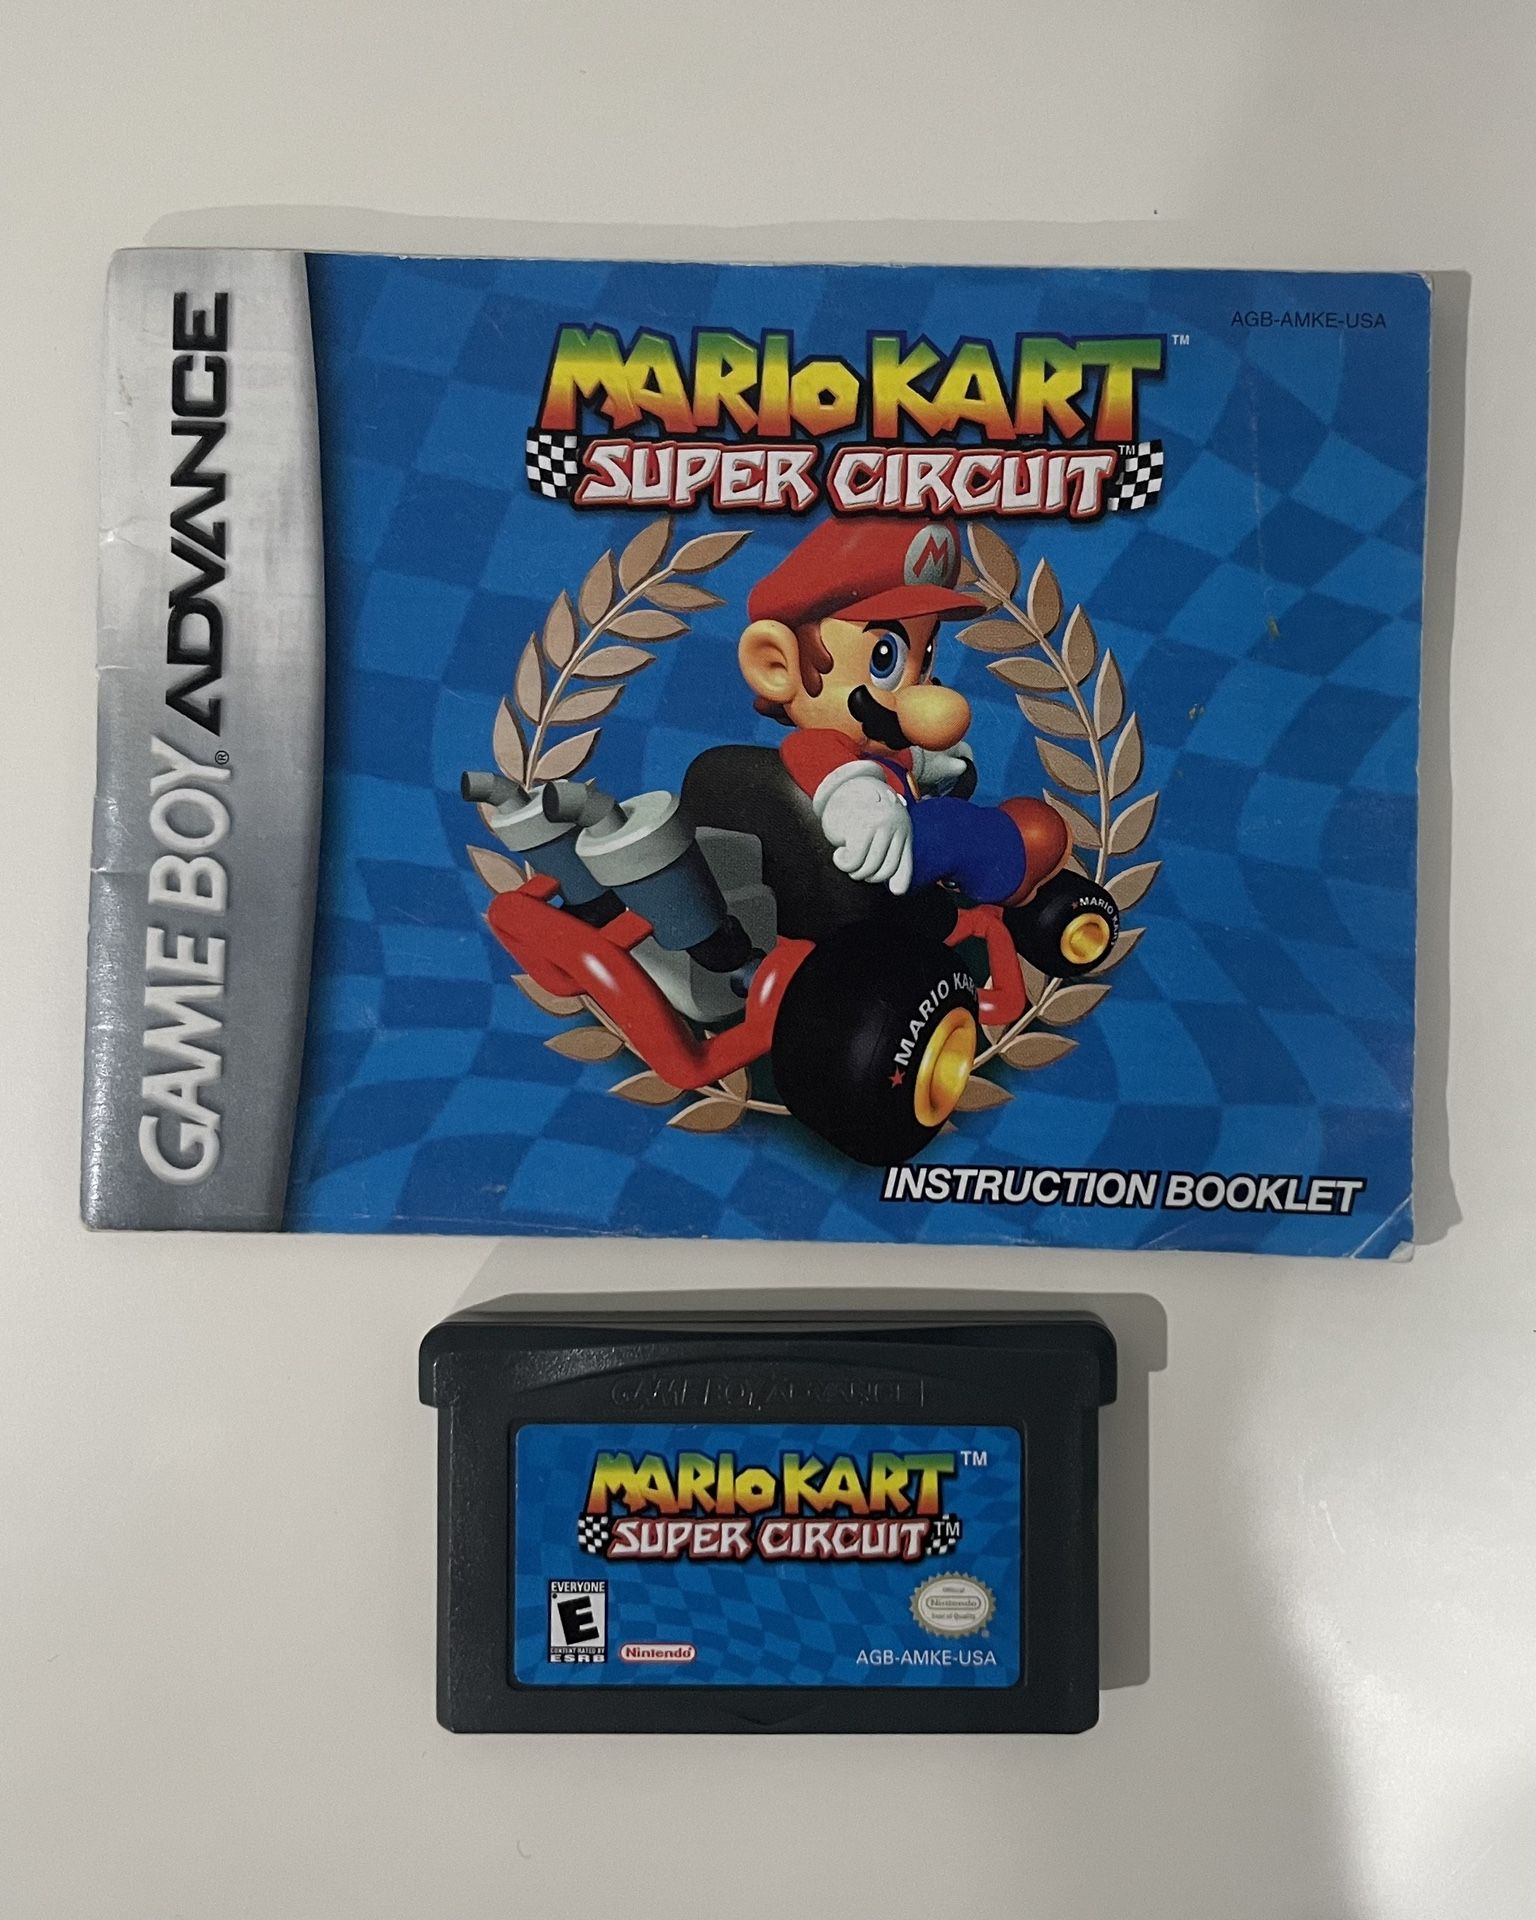 Mario Kart Super Circuit Game & Manual Nintendo Game Boy Advance GBA Tested Authentic Original Owner 